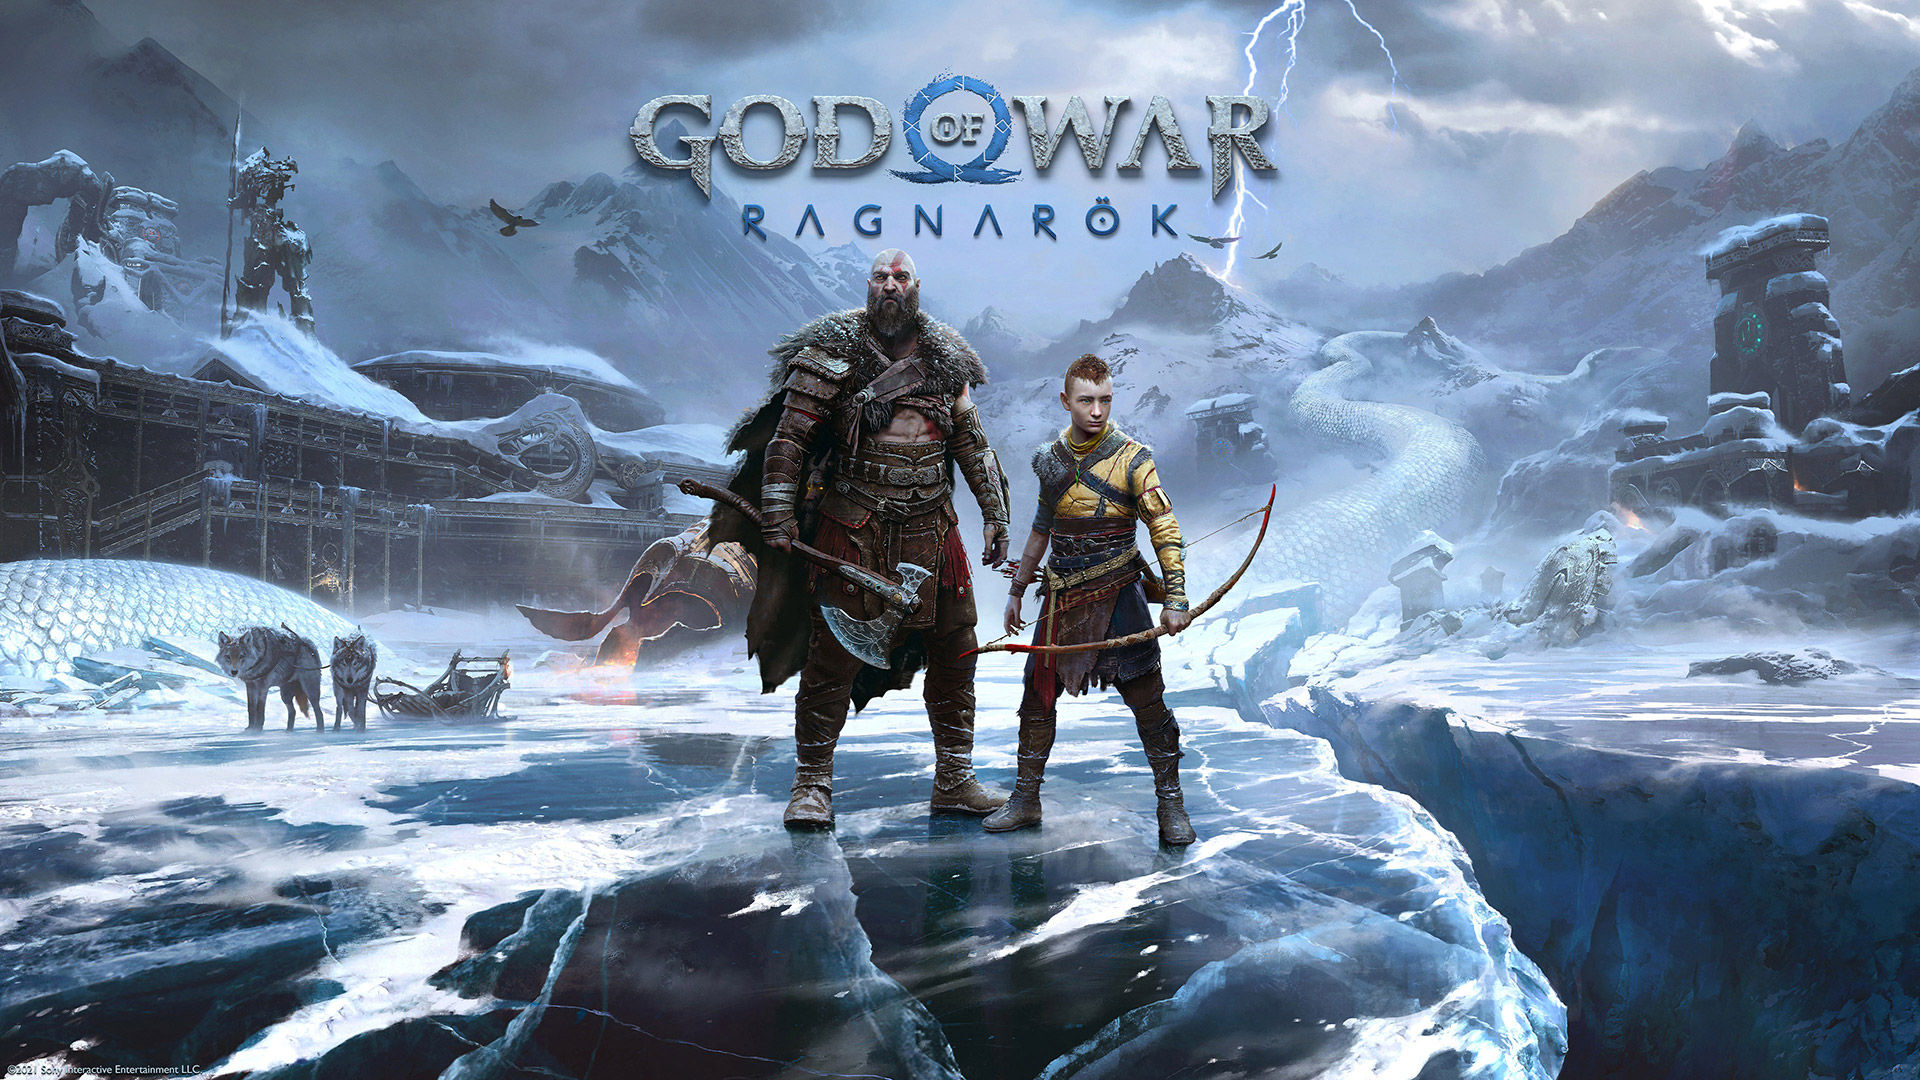 Trailer of ‘God of War: Ragnarok’ released during PlayStation Showcase